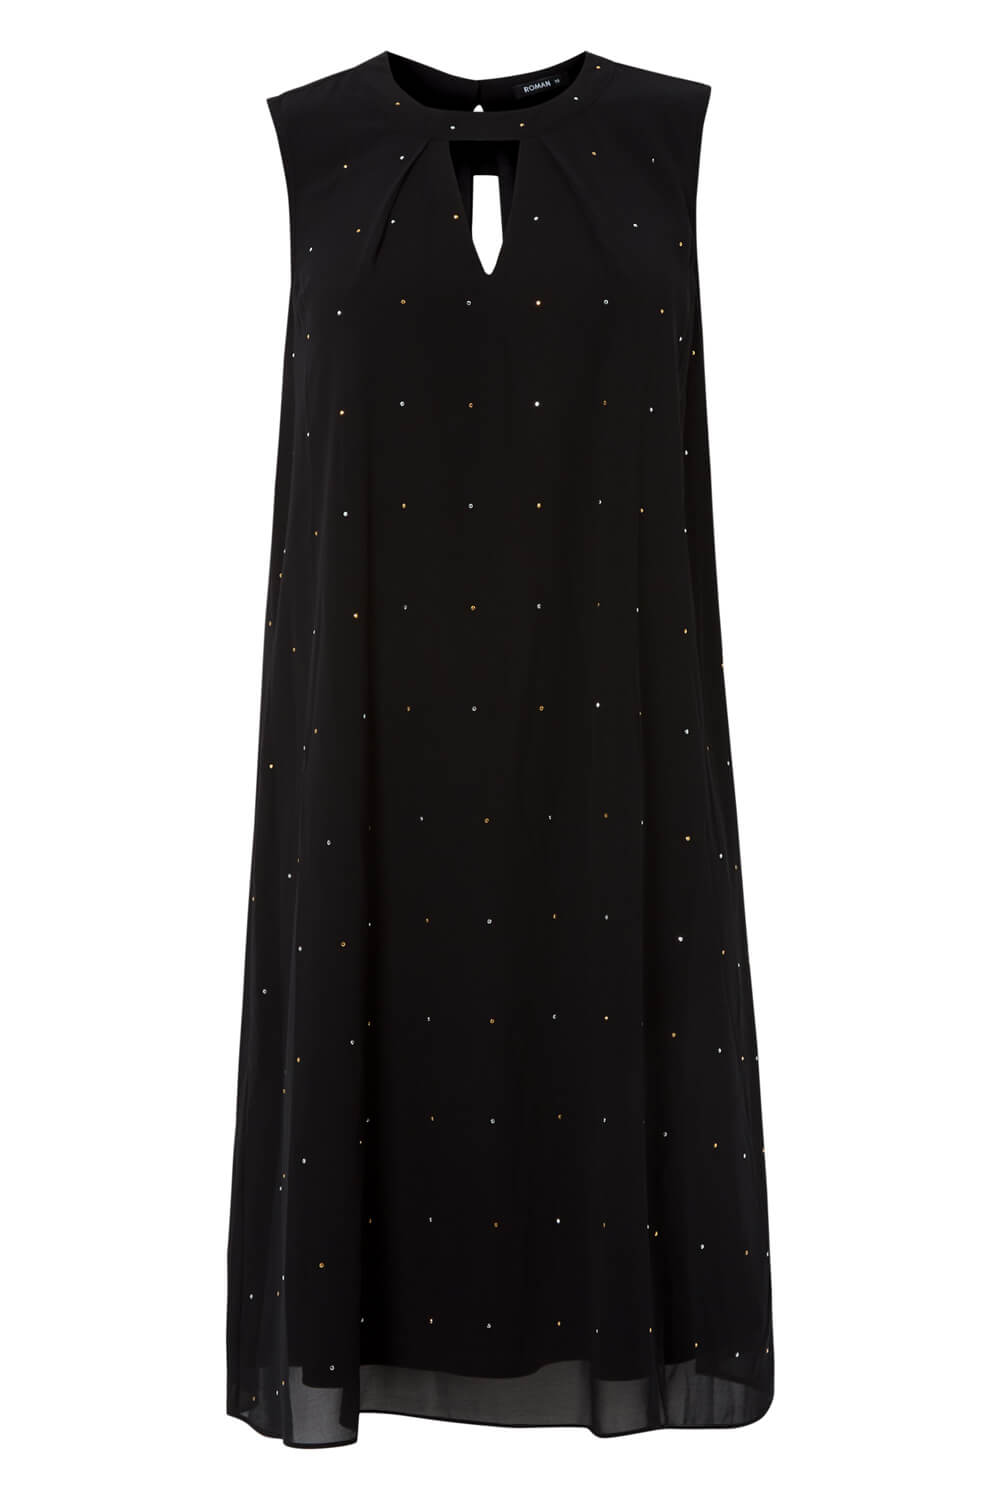 Embellished Chiffon Swing Dress in Black - Roman Originals UK